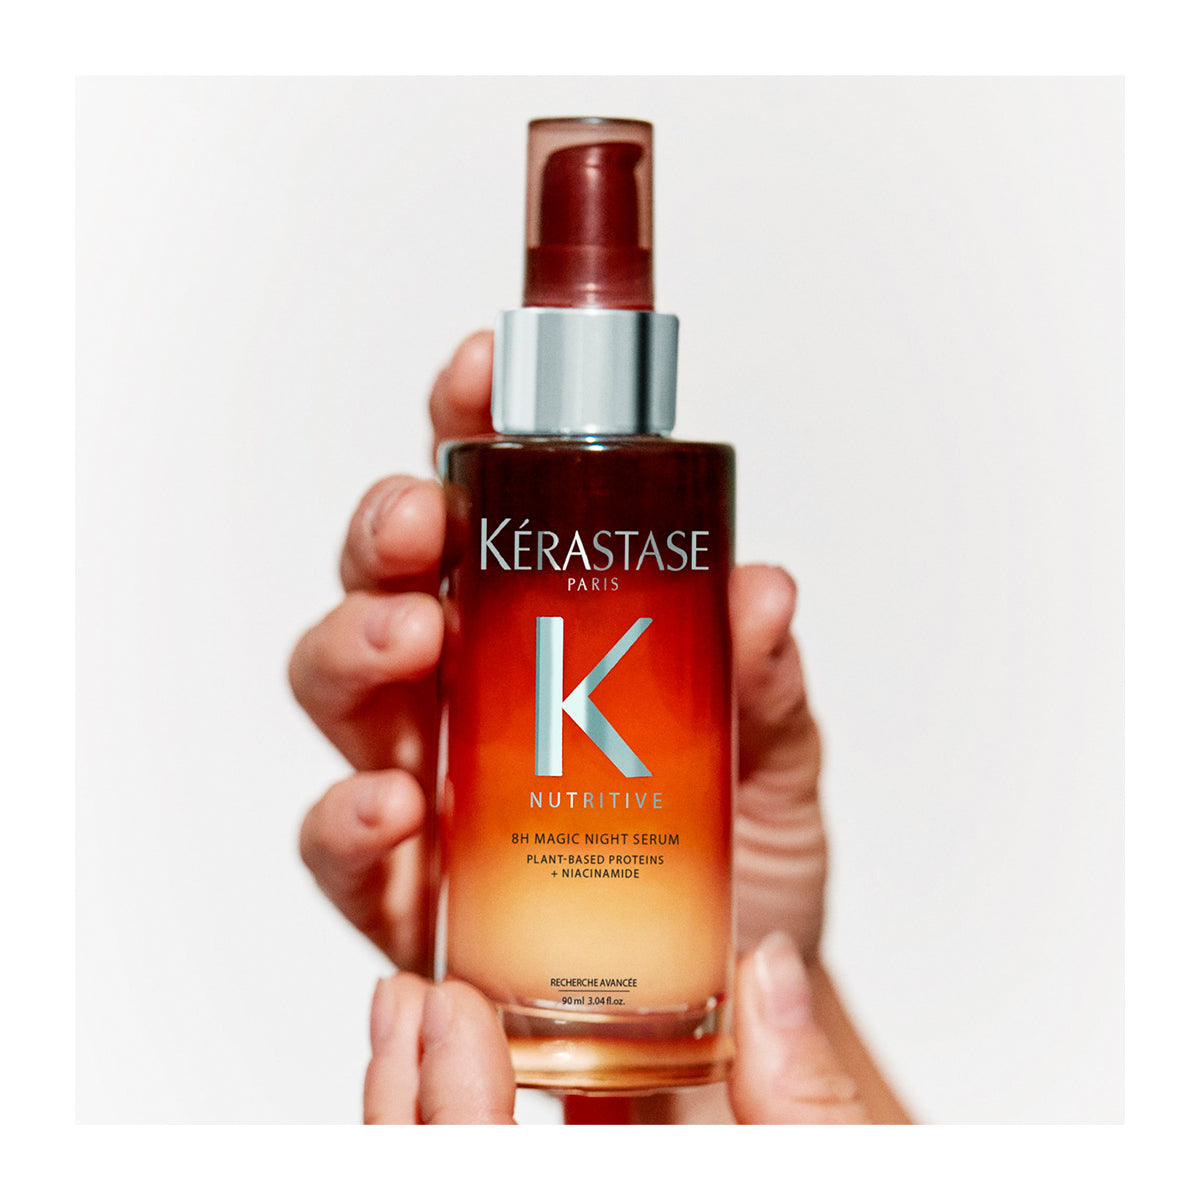 Kerastase Nutritive 8H Magic Night Serum Ορός Νυκτός για Εντατική Θρέψη &amp; Αναζωογόνηση των Ξηρών Μαλλιών 90ml